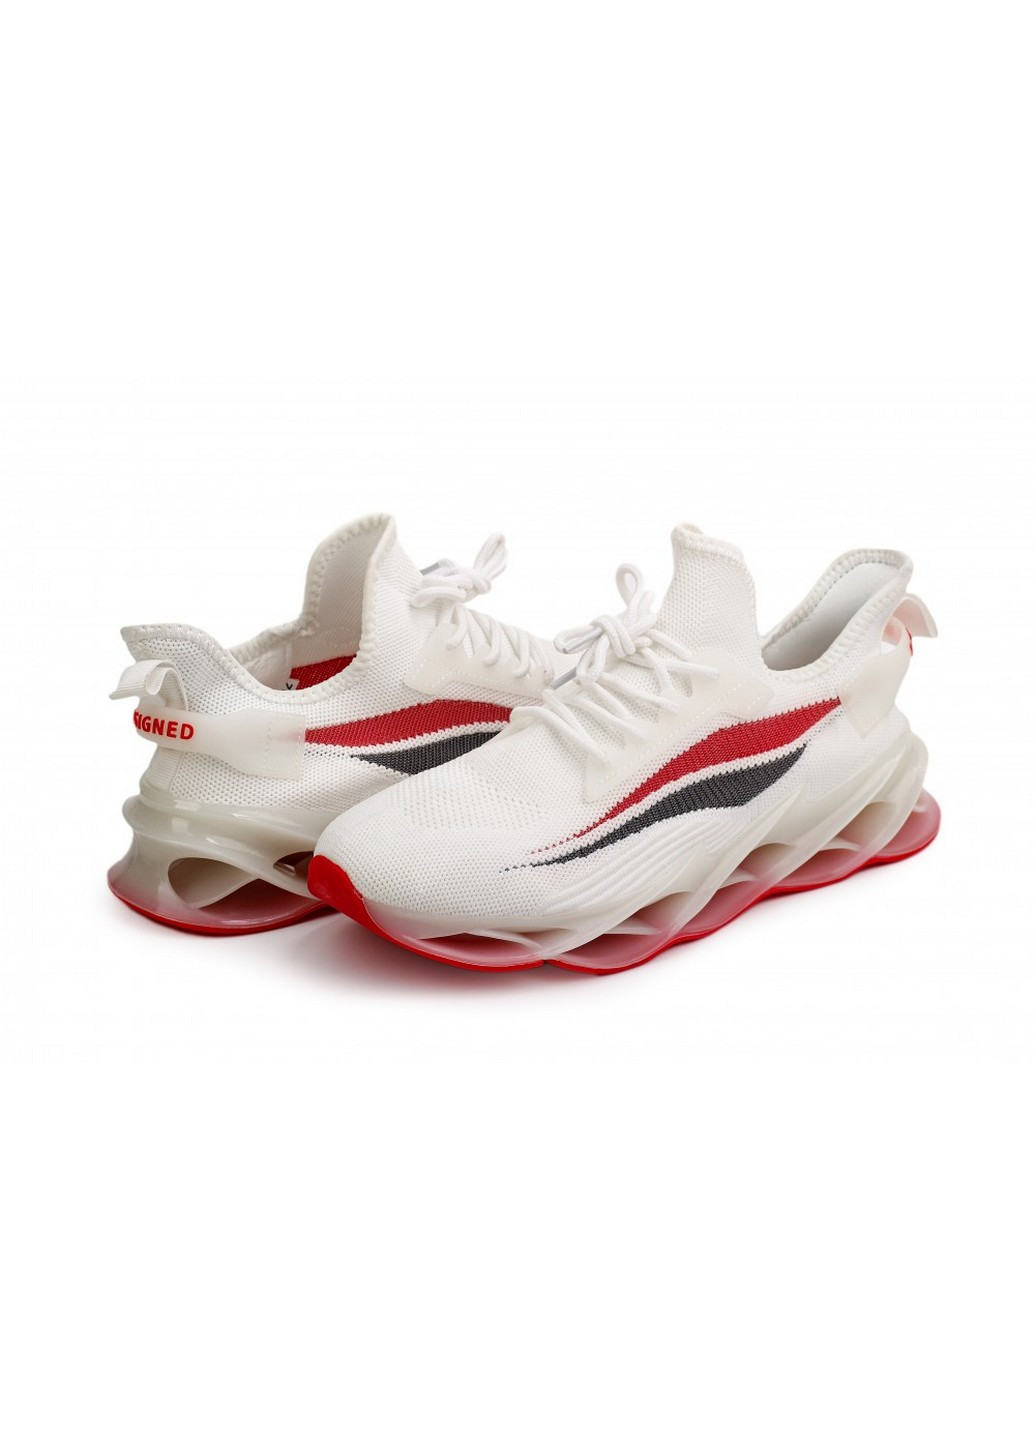 Білі Осінні кросівки g195white-red 45 білий (2000903791850) Erra